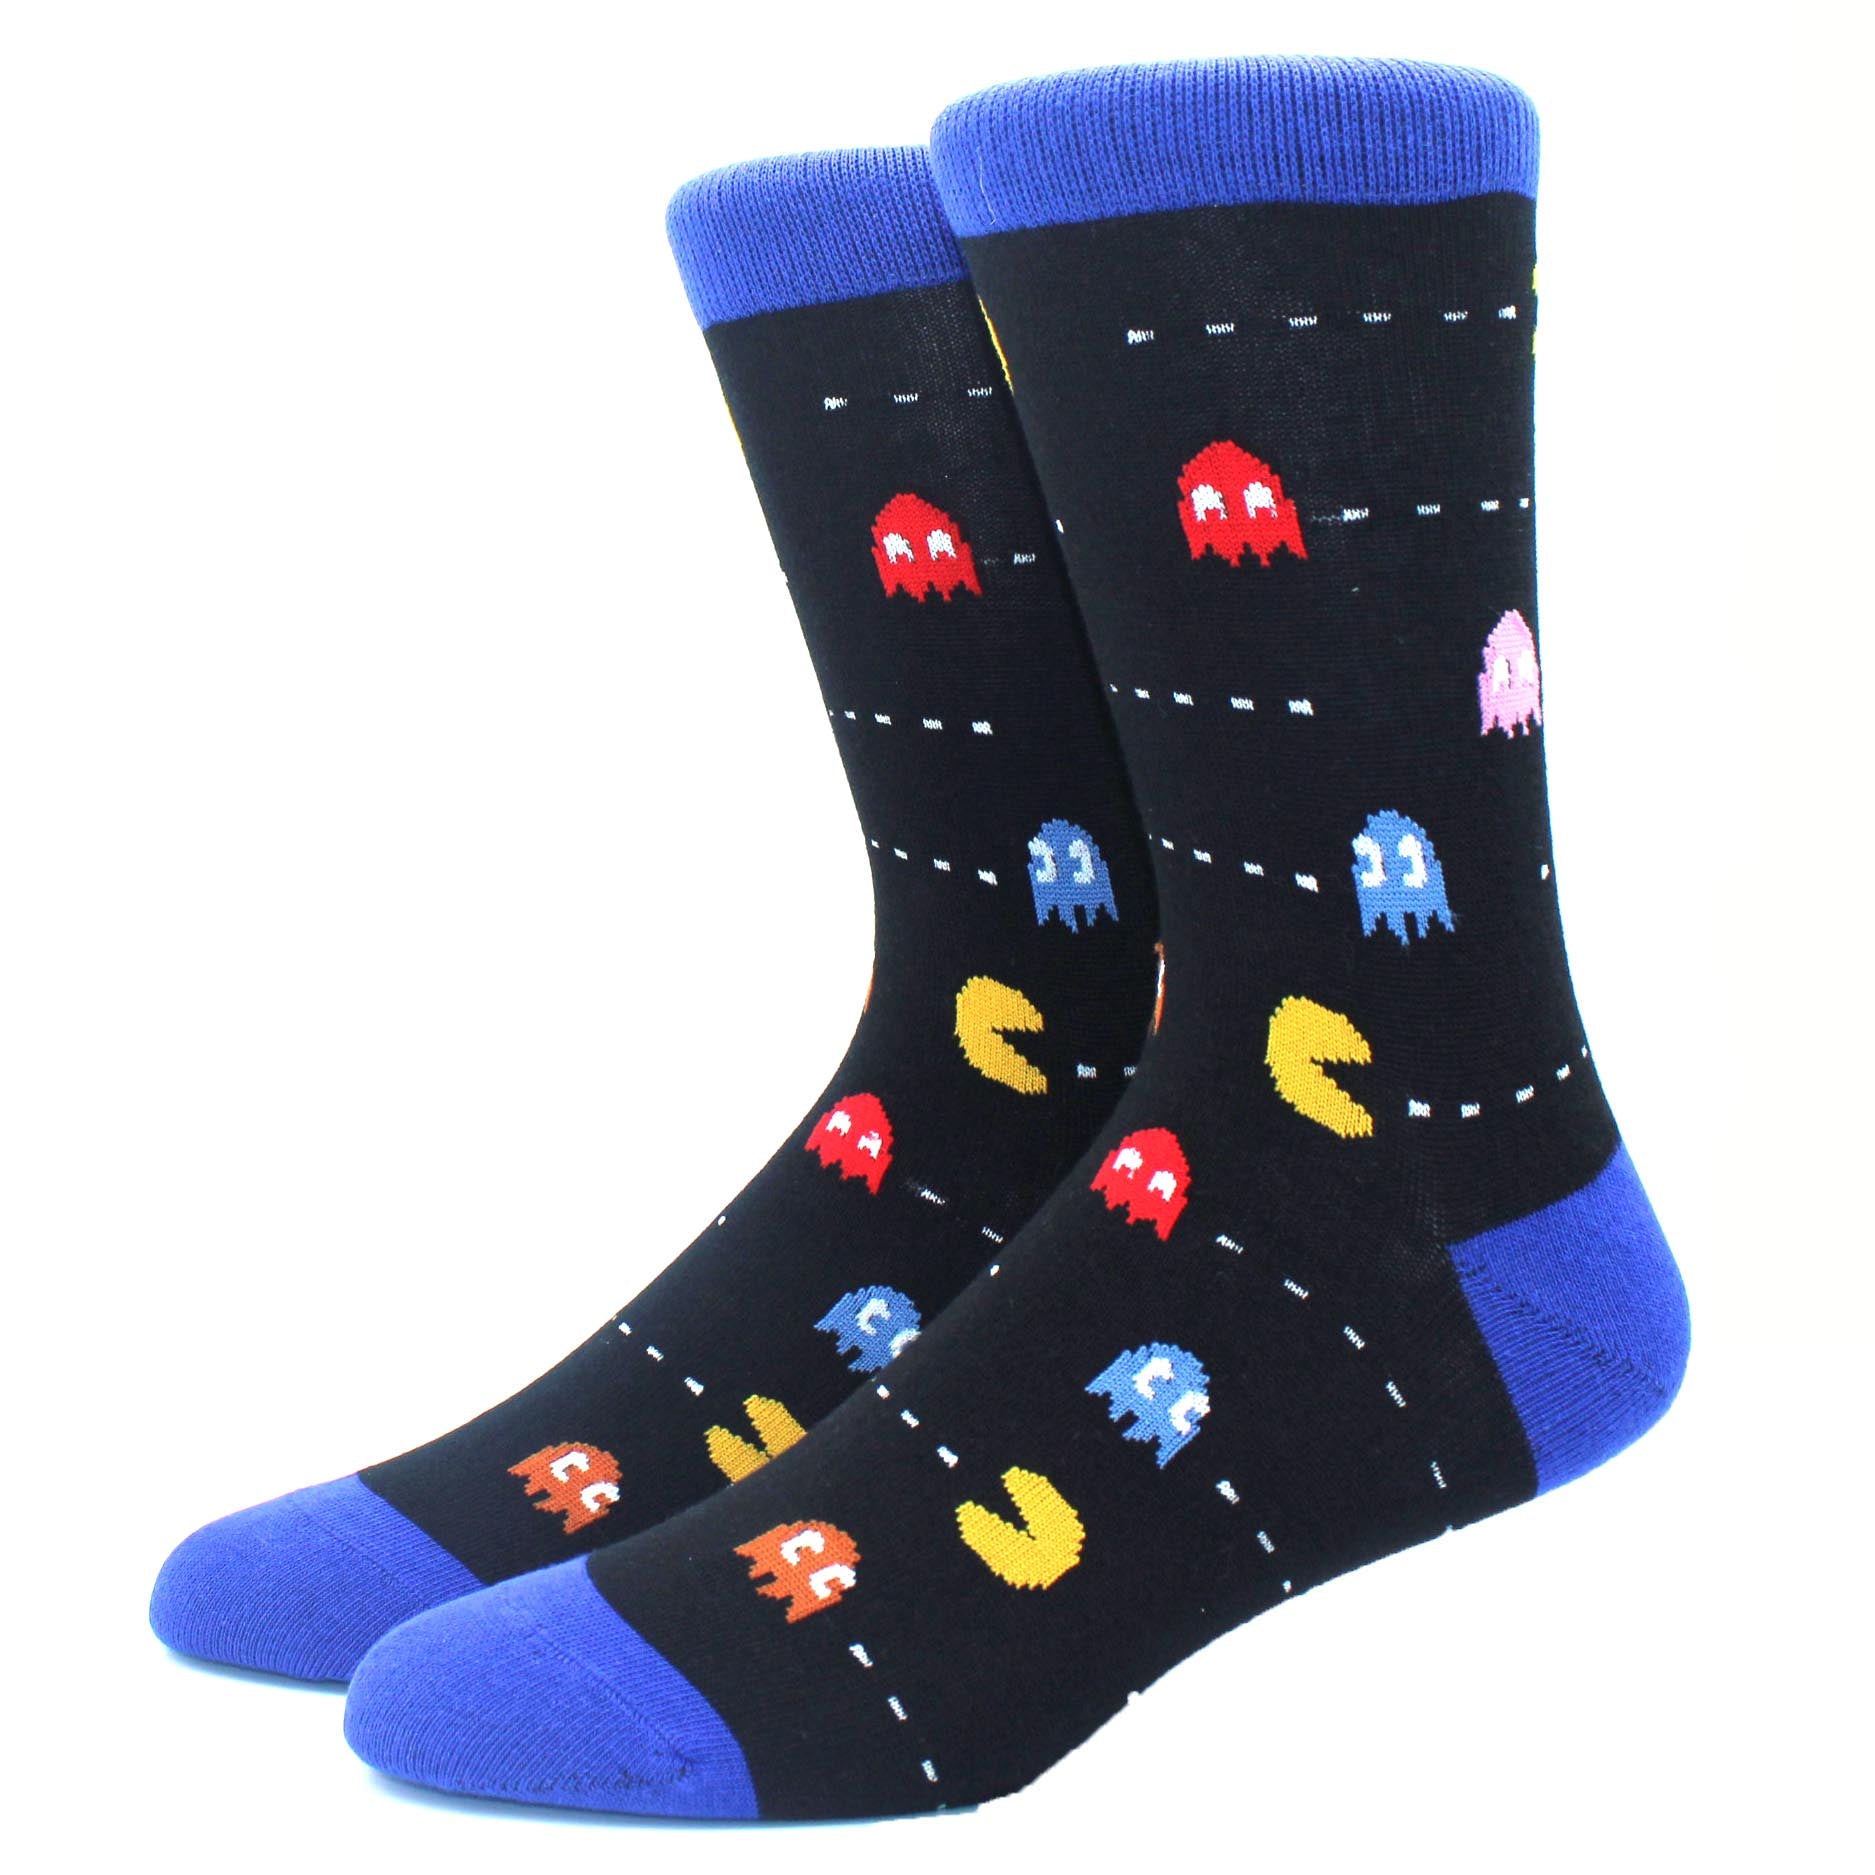 Men fashion socks anime funny socks hip hop personality anime socks cartoon fashion high quality sewing pattern socks